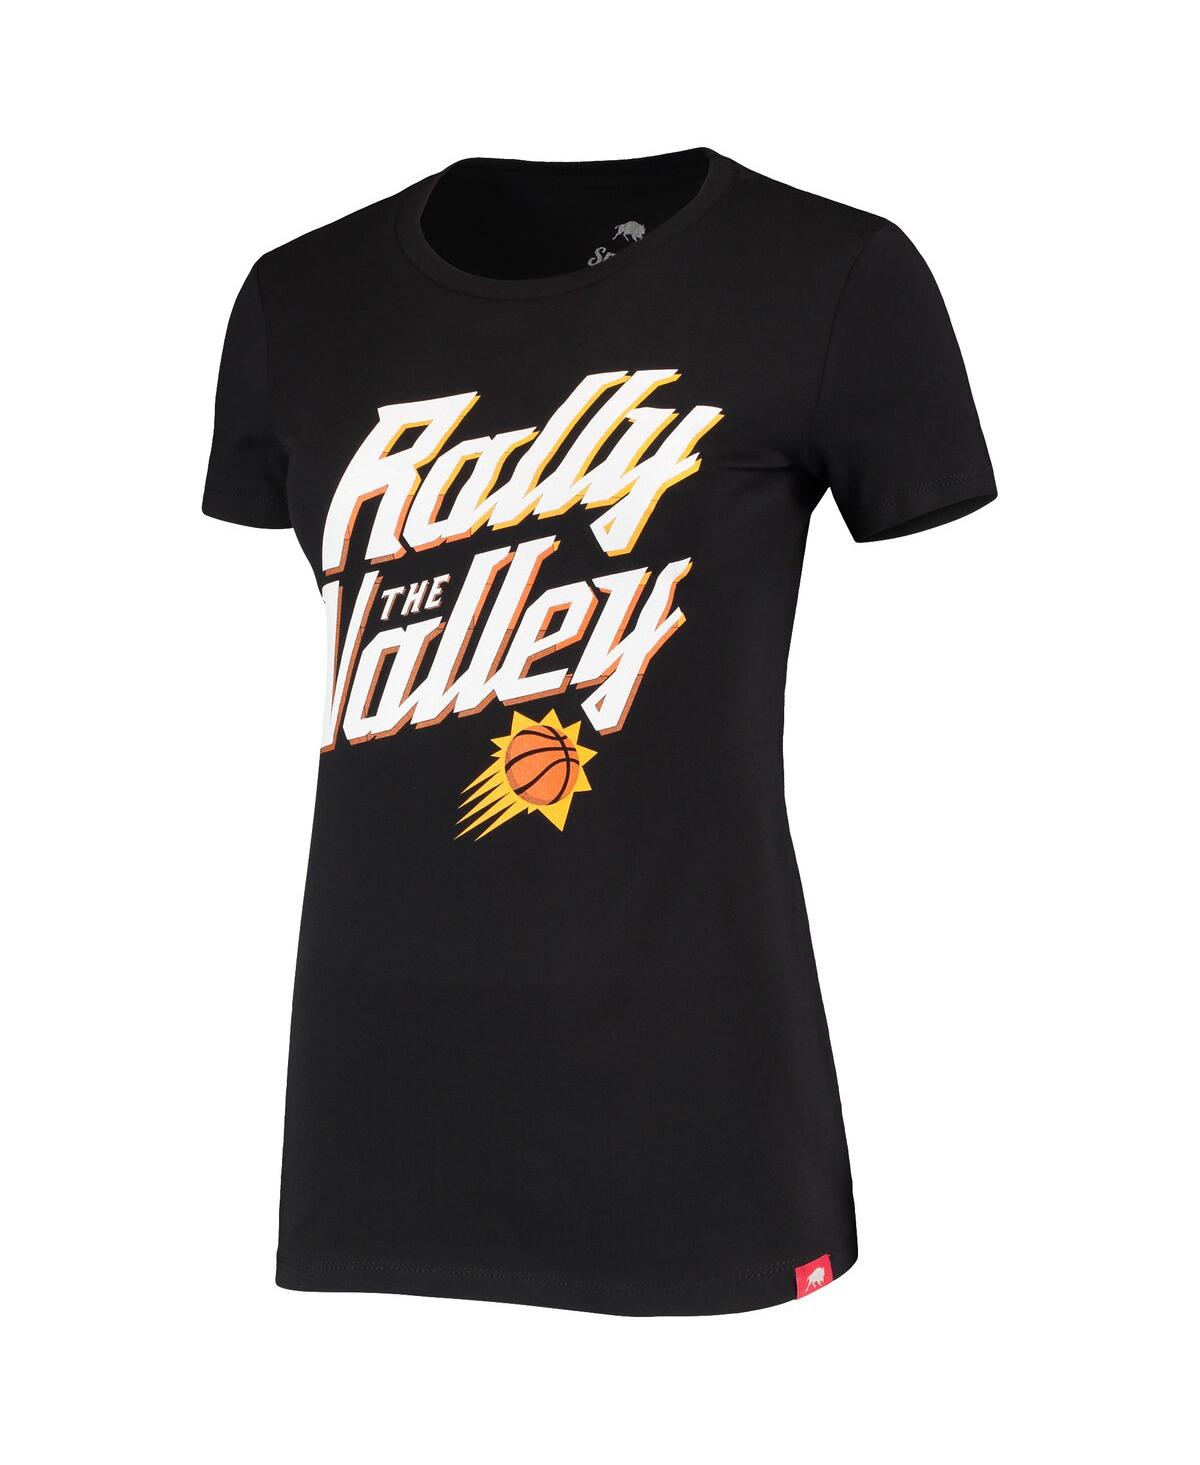 Shop Sportiqe Women's  Heathered Black Phoenix Suns Rally The Valley Davis T-shirt